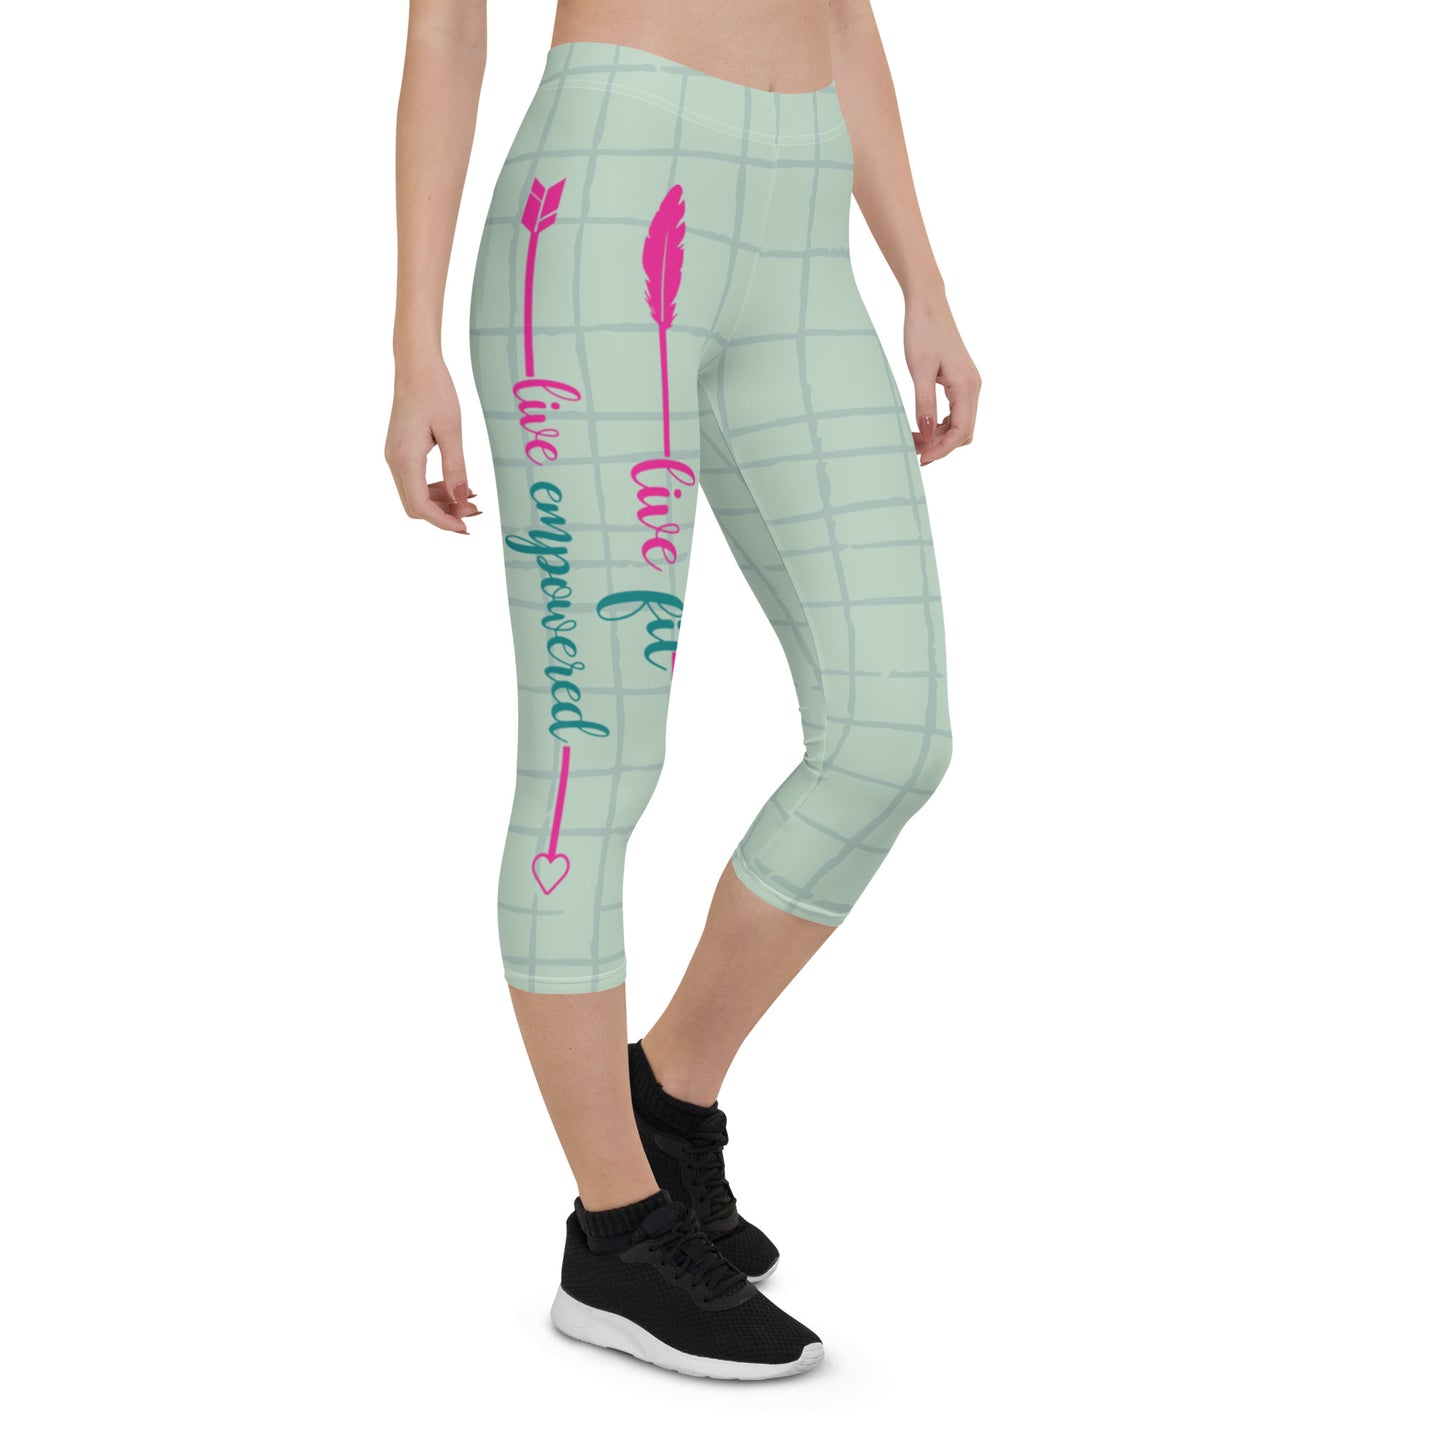 Live Fit, Live Empowered, Live Unstoppable (Pink & Blue Logo)Women's Fitness Capri Leggings